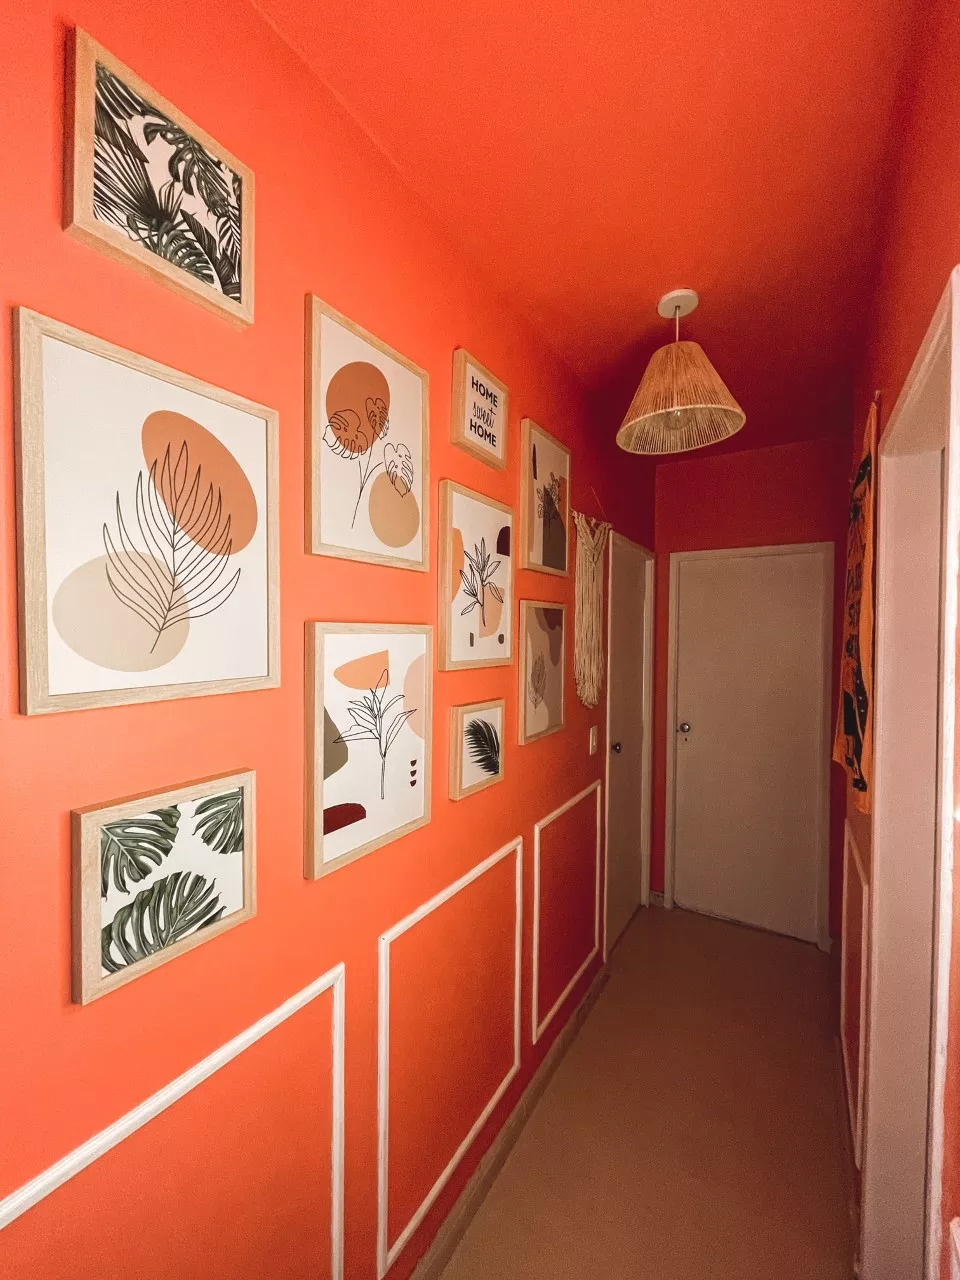 corredor laranja com quadros